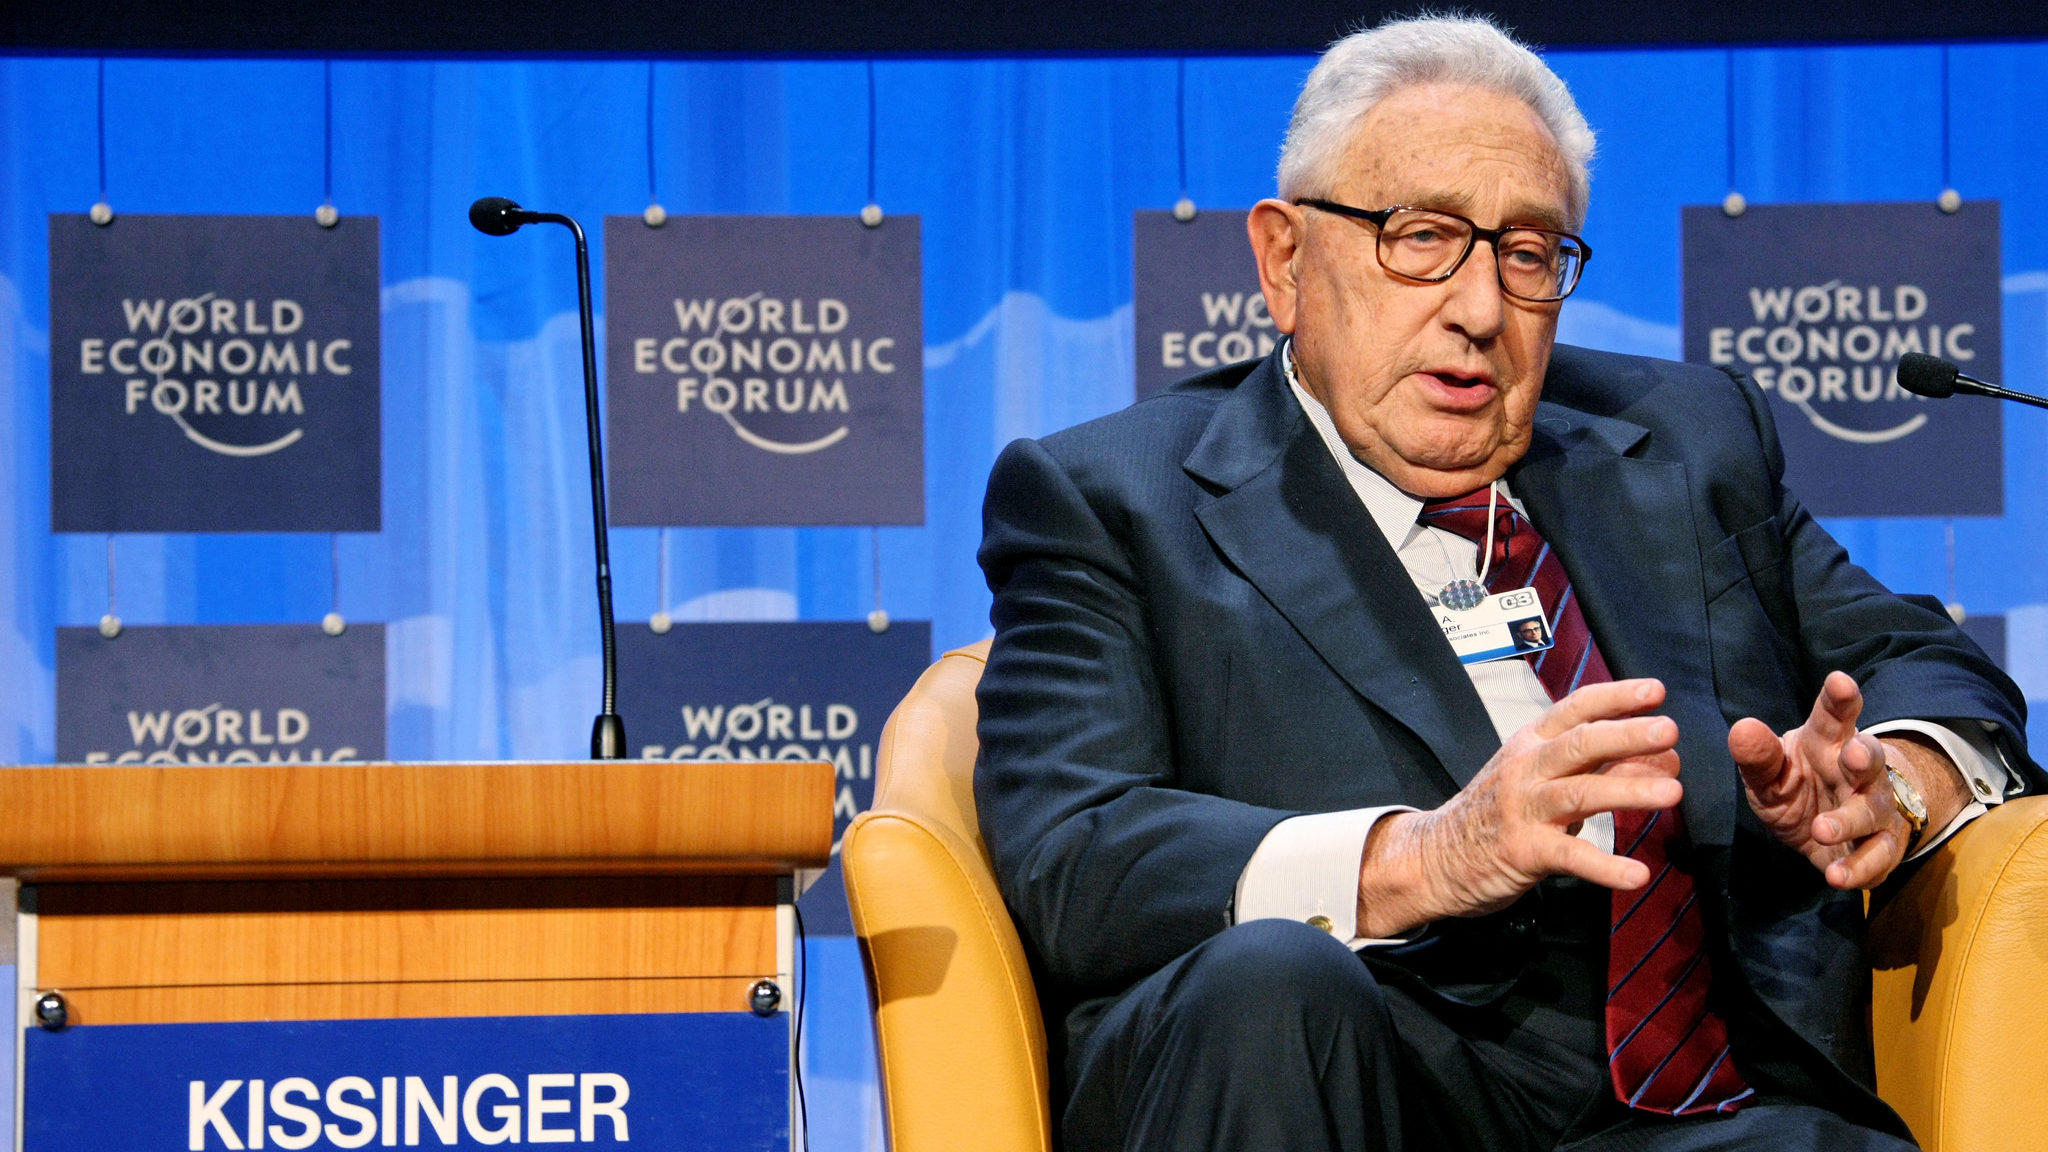 Kissinger and Ukrainian Insults